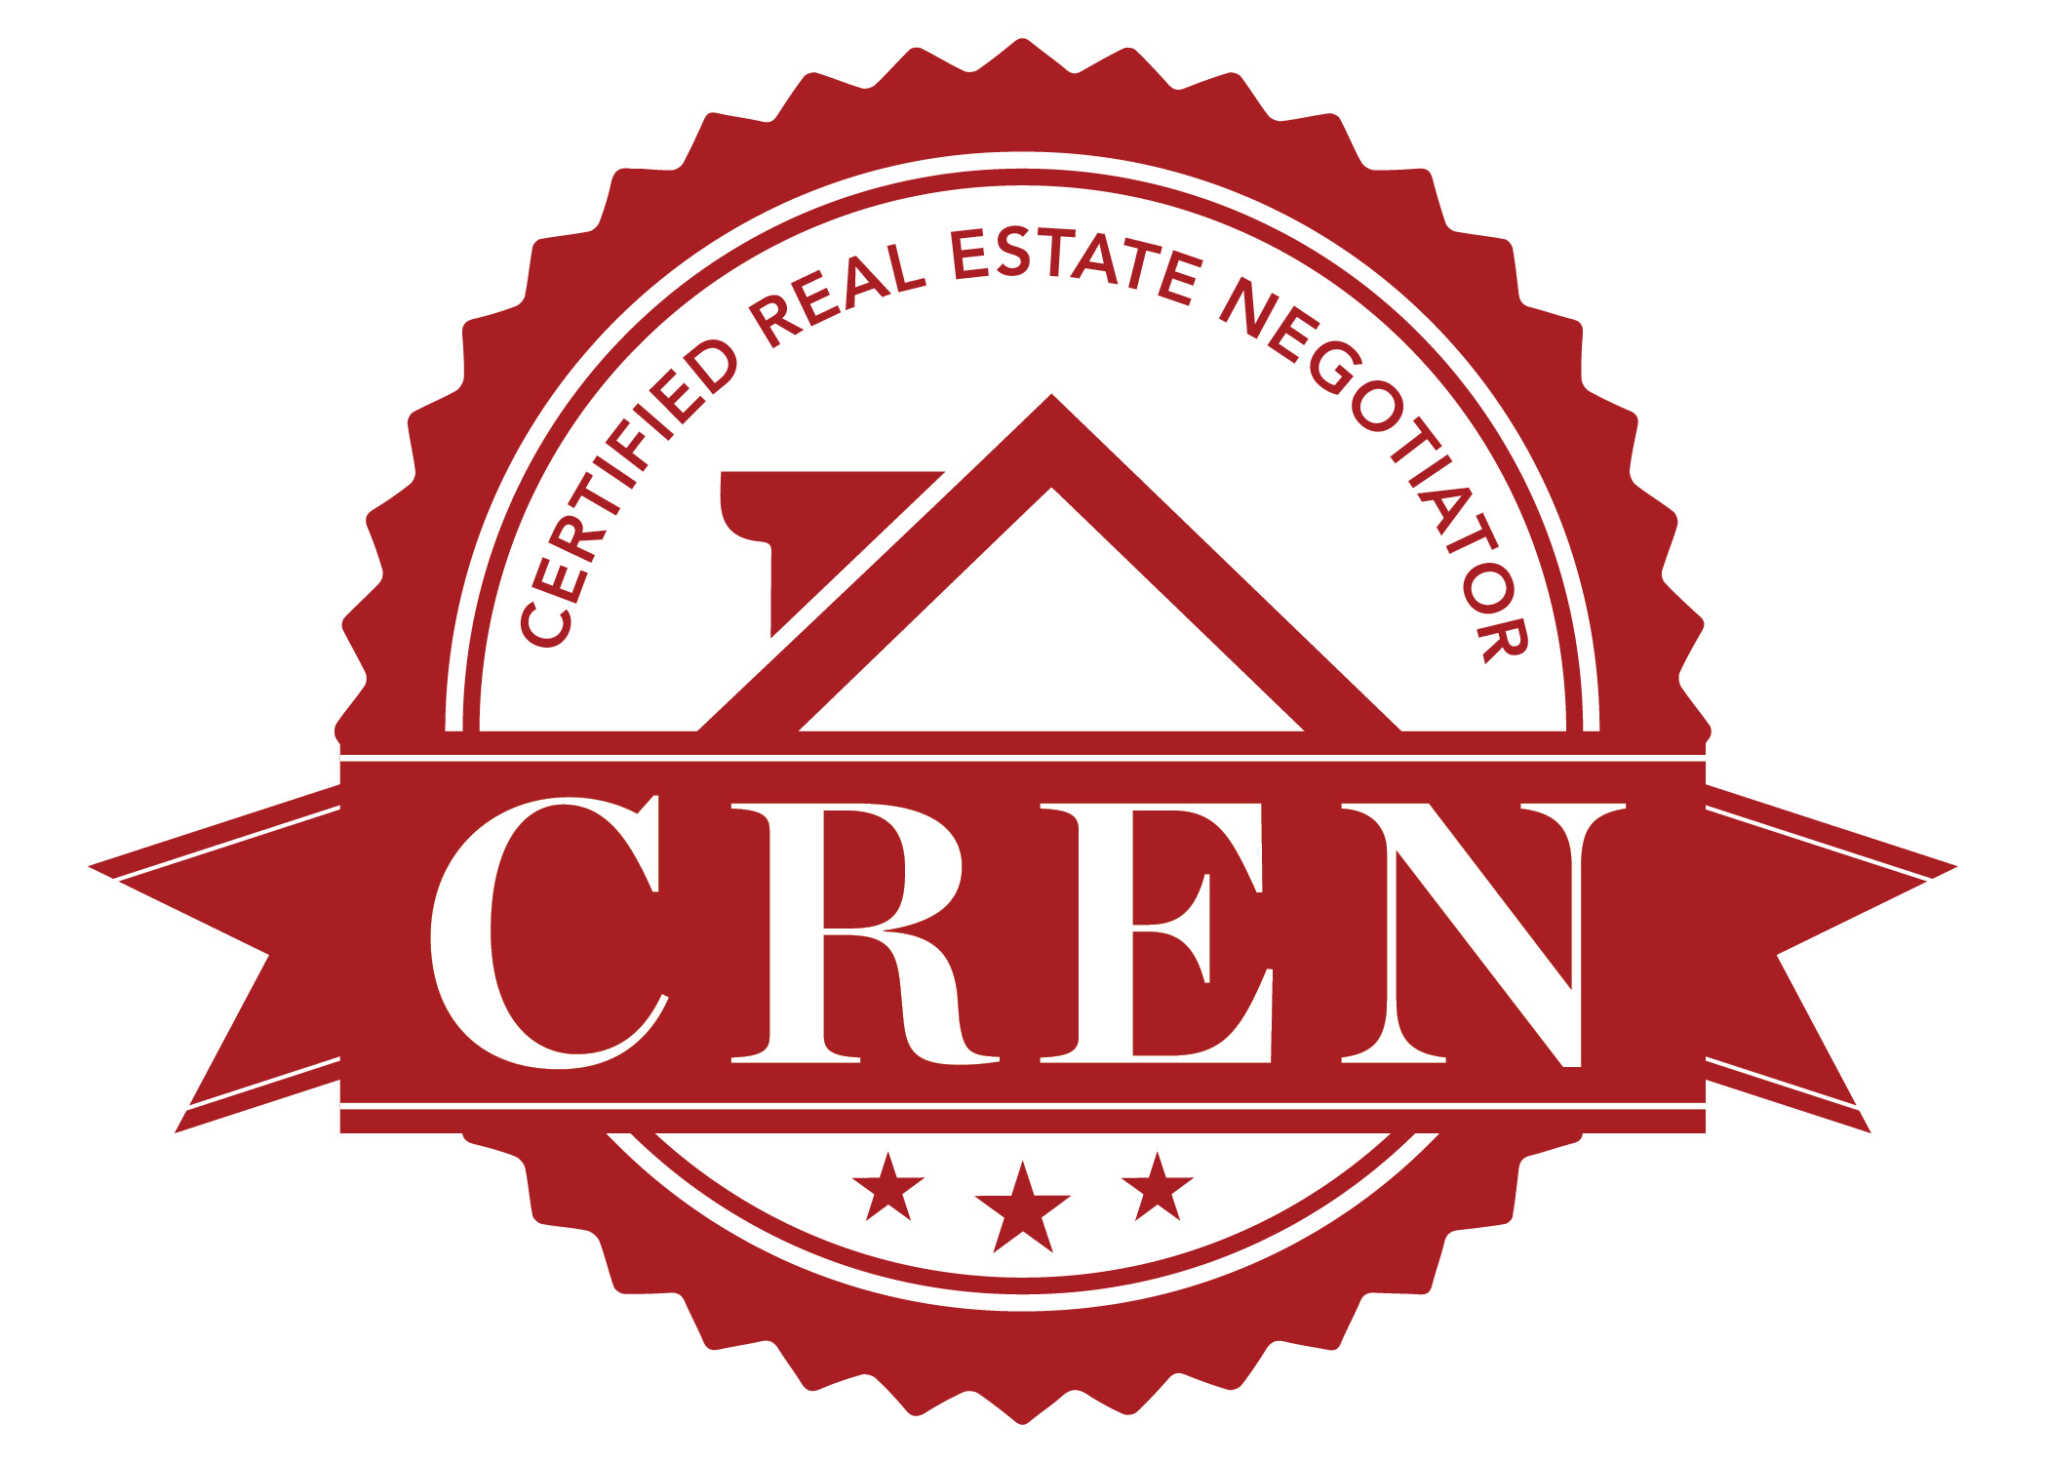 Certified Real Estate Negotiator